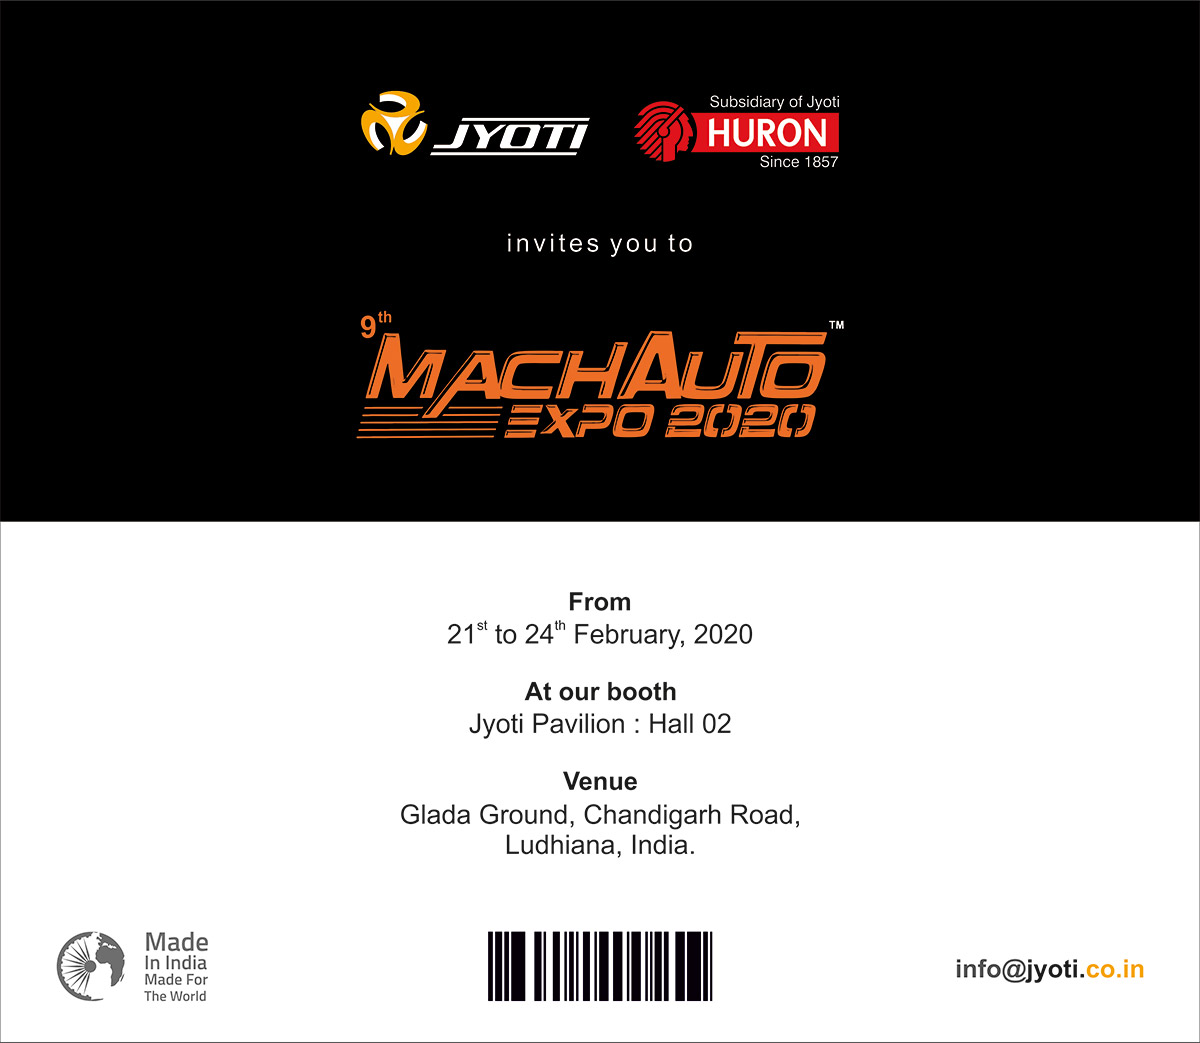  Invitation to visit us at Jyoti Pavilion, Mach Auto Expo 2020